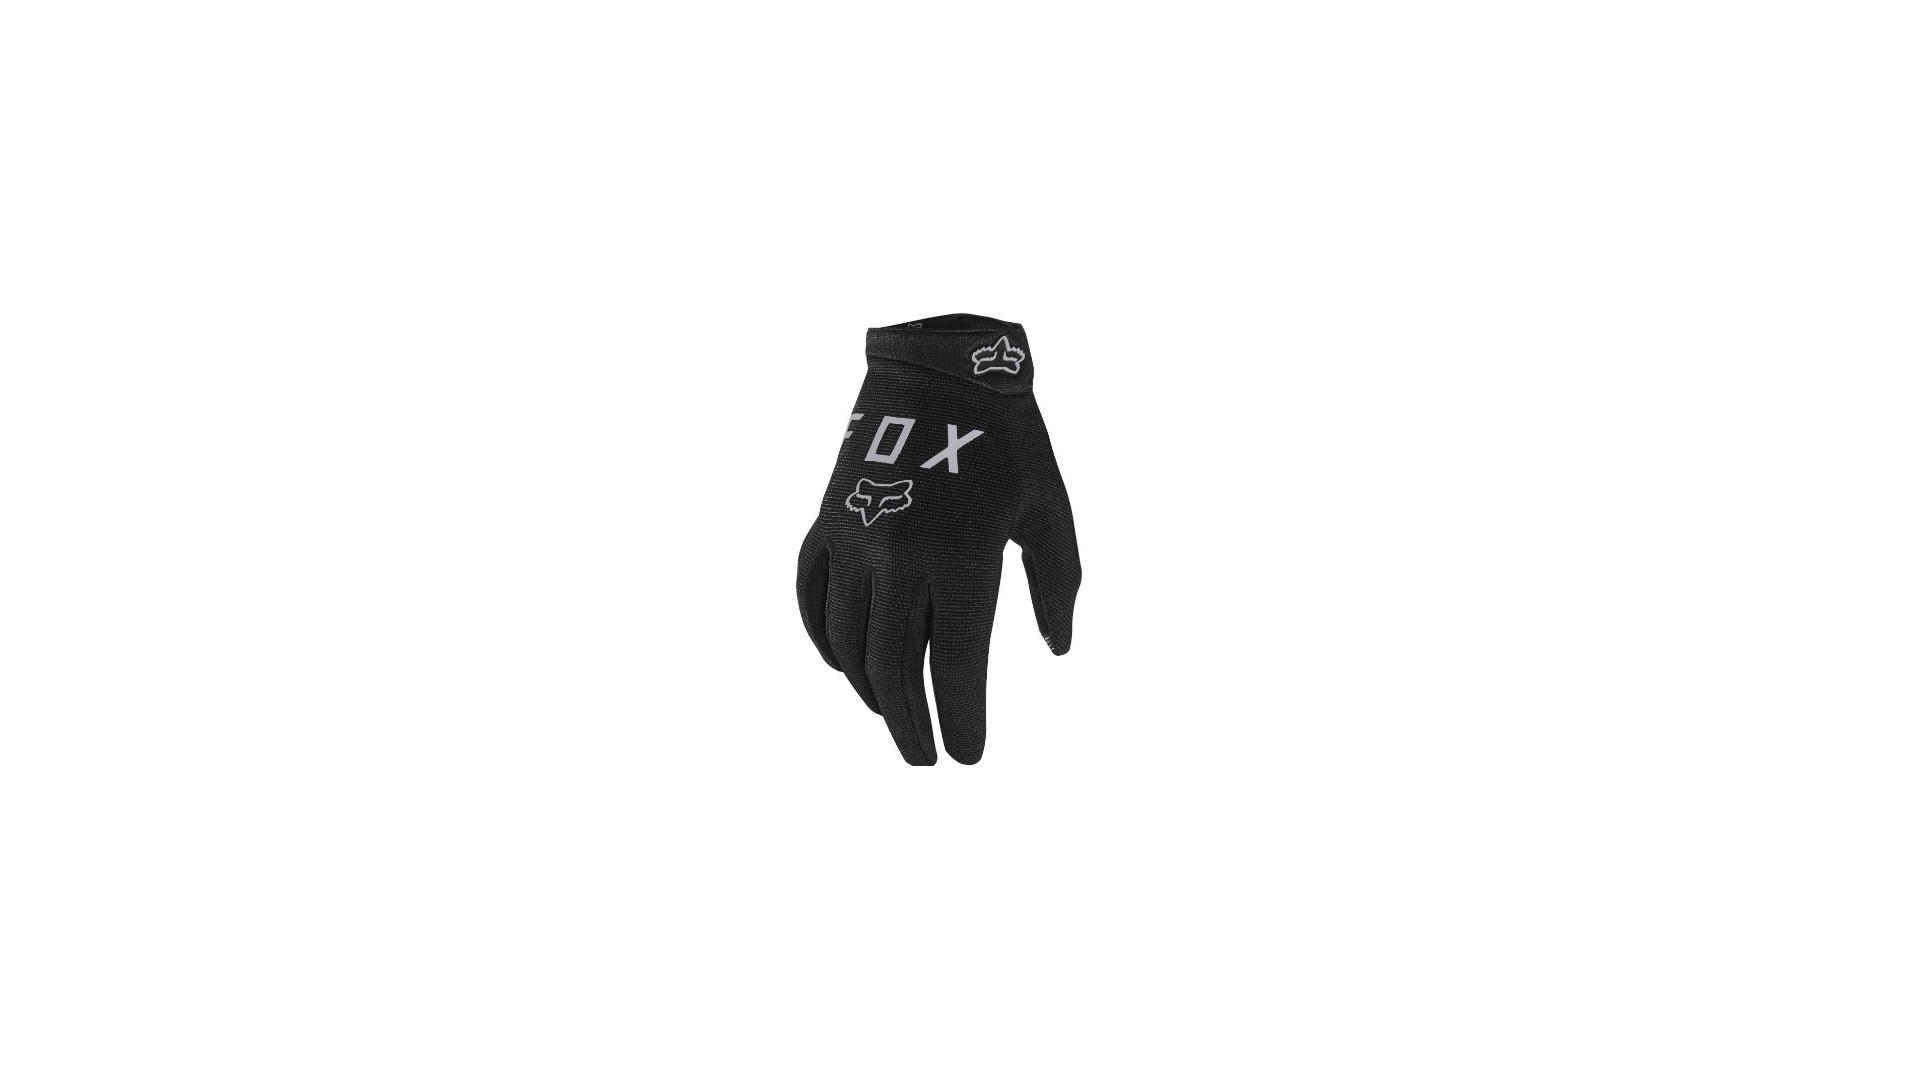 Rękawiczki FOX Ranger gel damskie czarne r.M - 22951_001_M